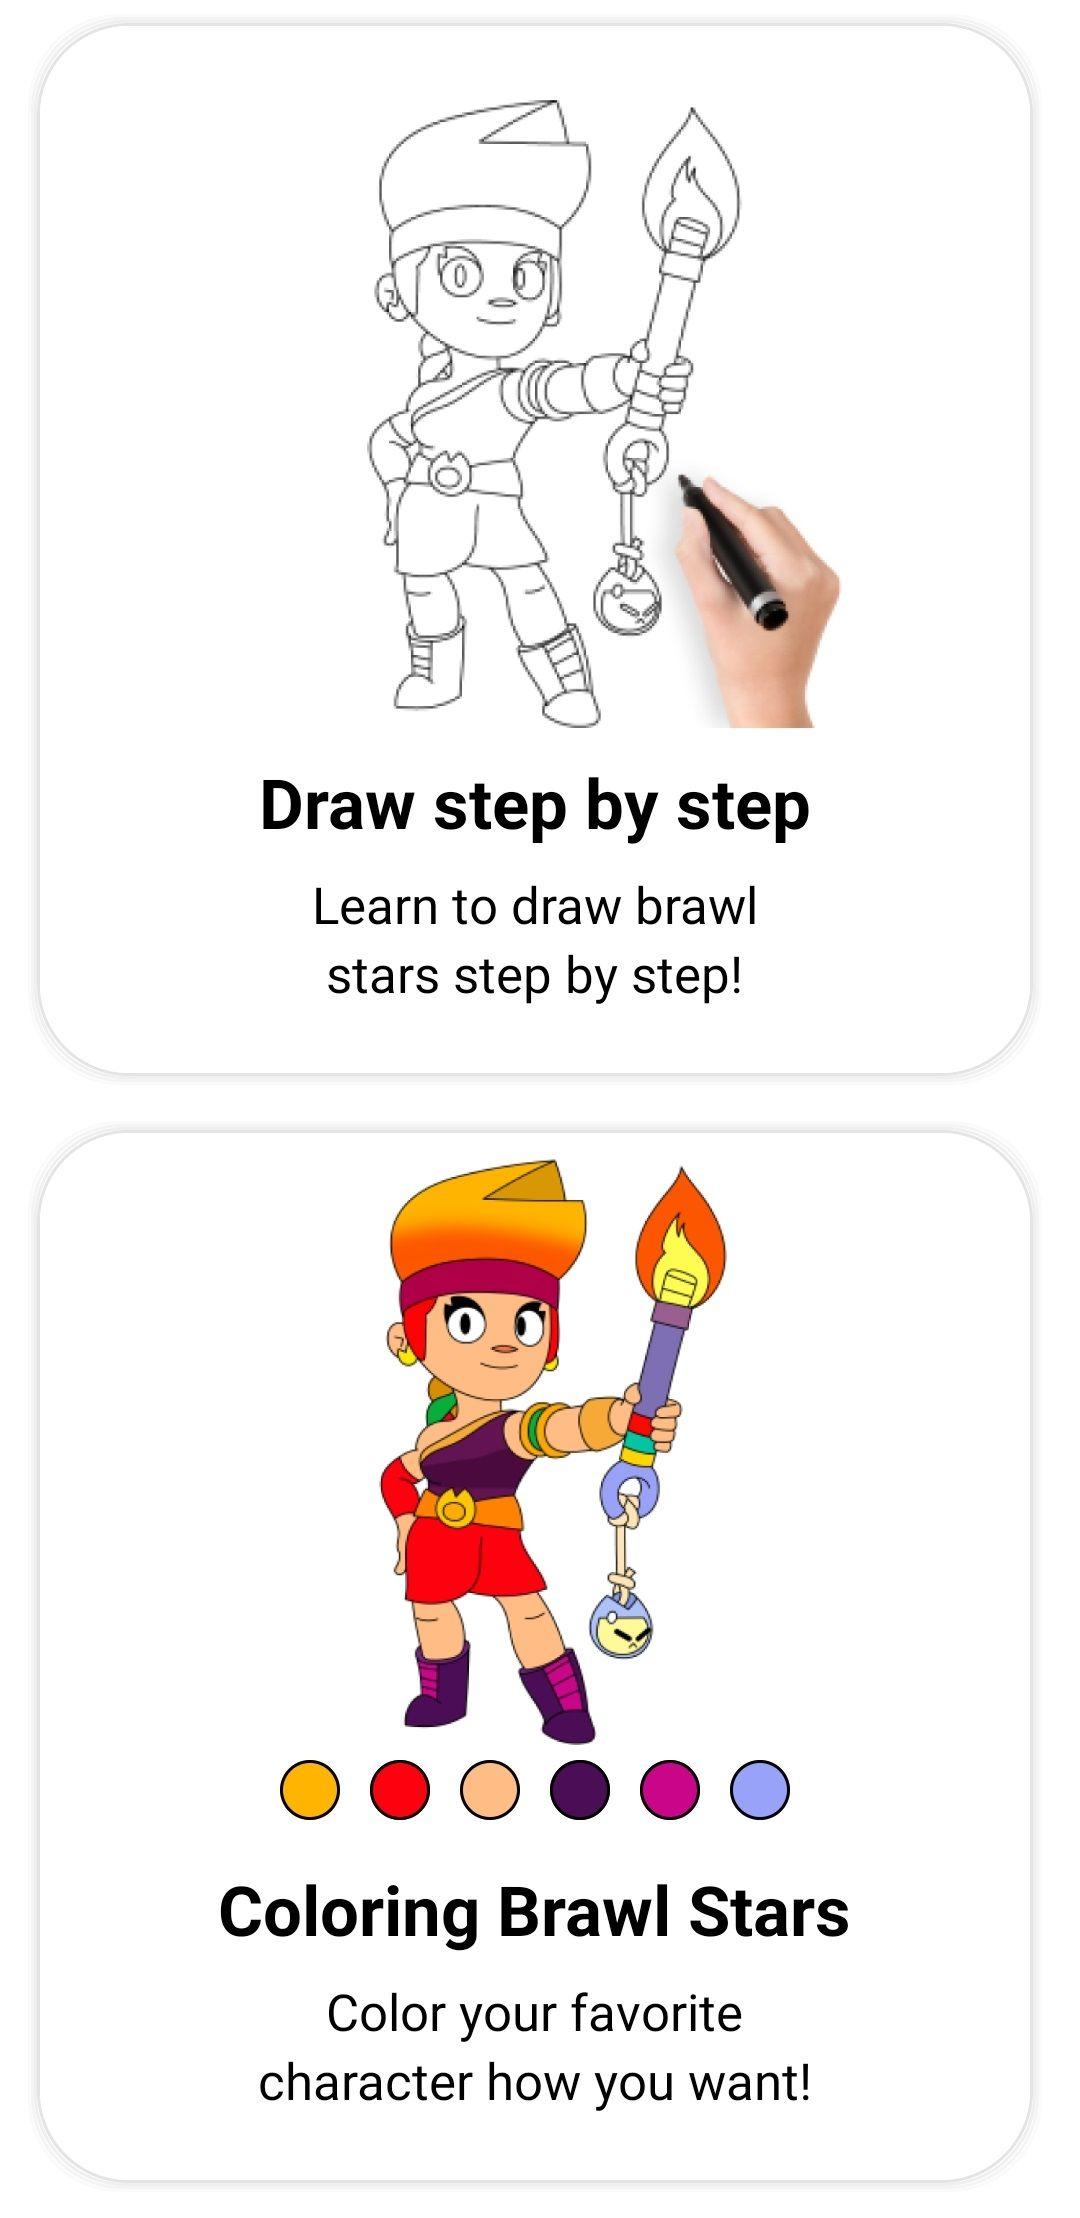 Coloring Brawl Stars How To Draw Brawl Stars For Android Apk Download - brawl stars karakterleri resmi çizimi leon